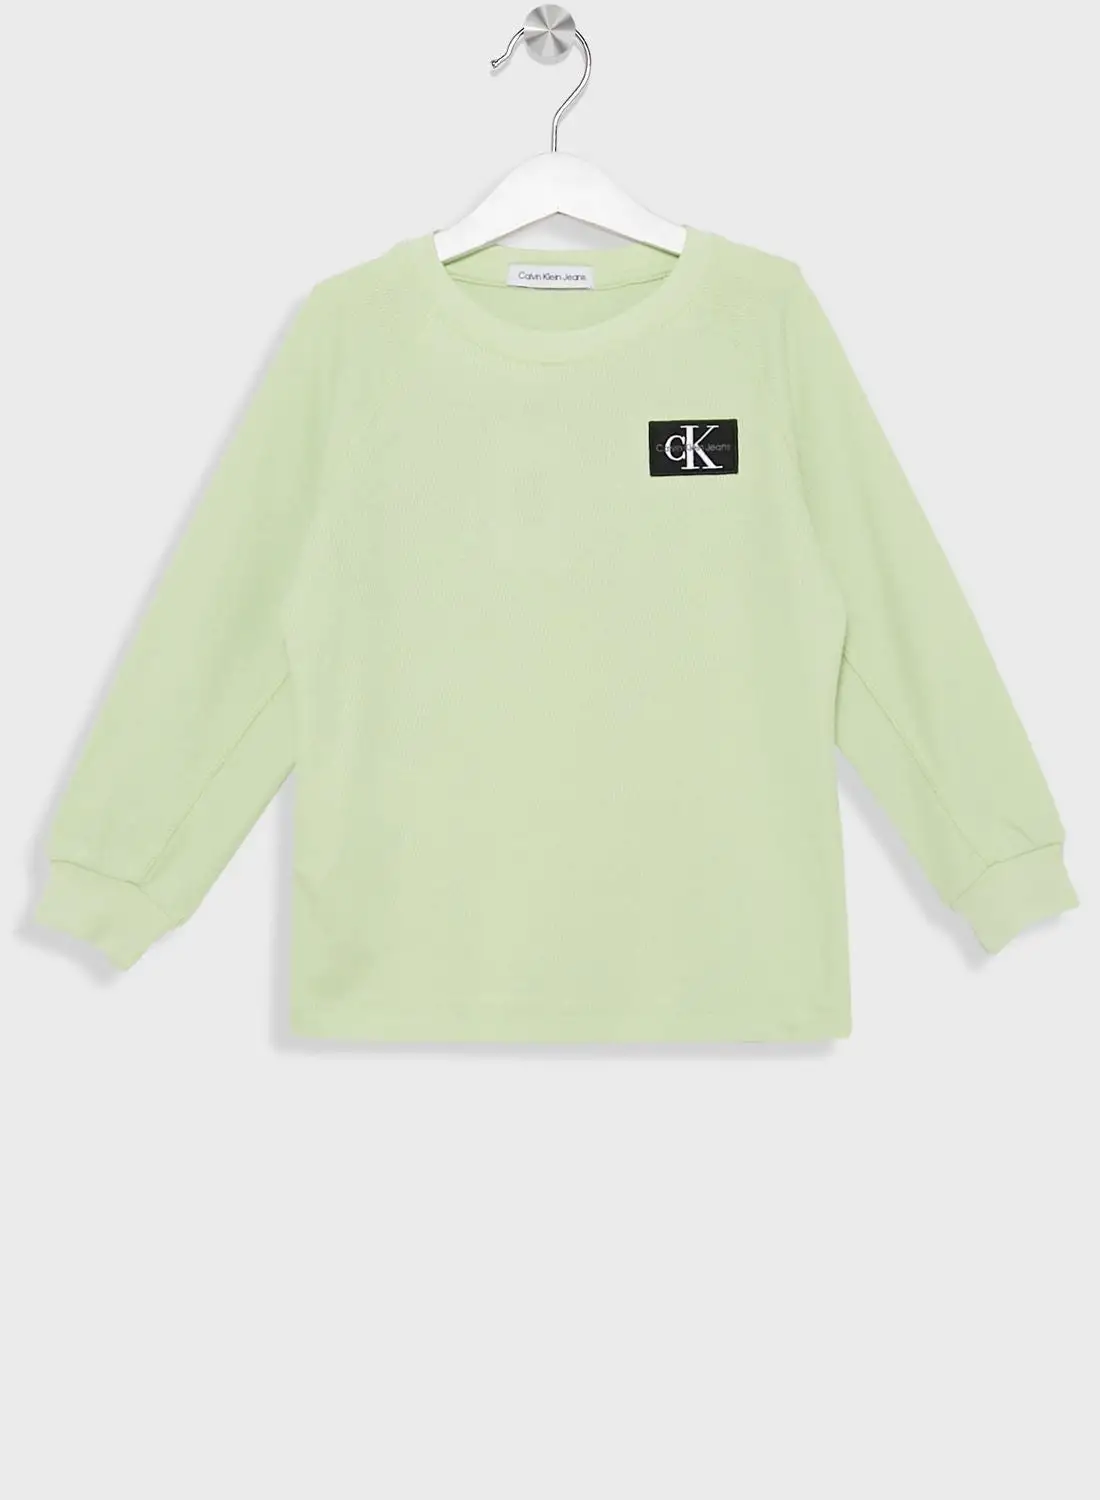 Calvin Klein Jeans Kids Logo T-Shirt